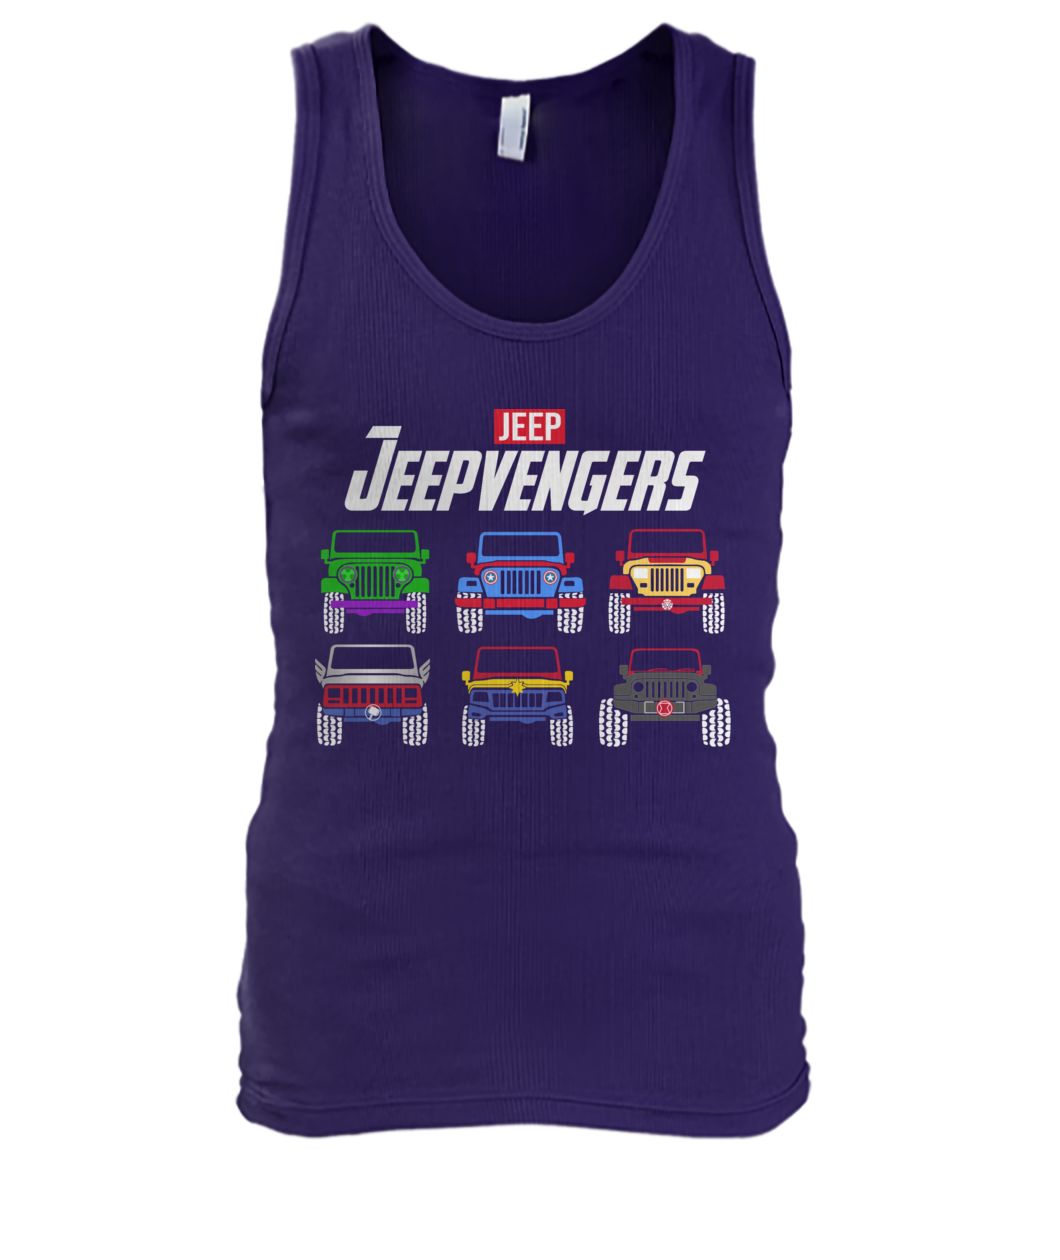 Avengers end game jeepvengers men's tank top